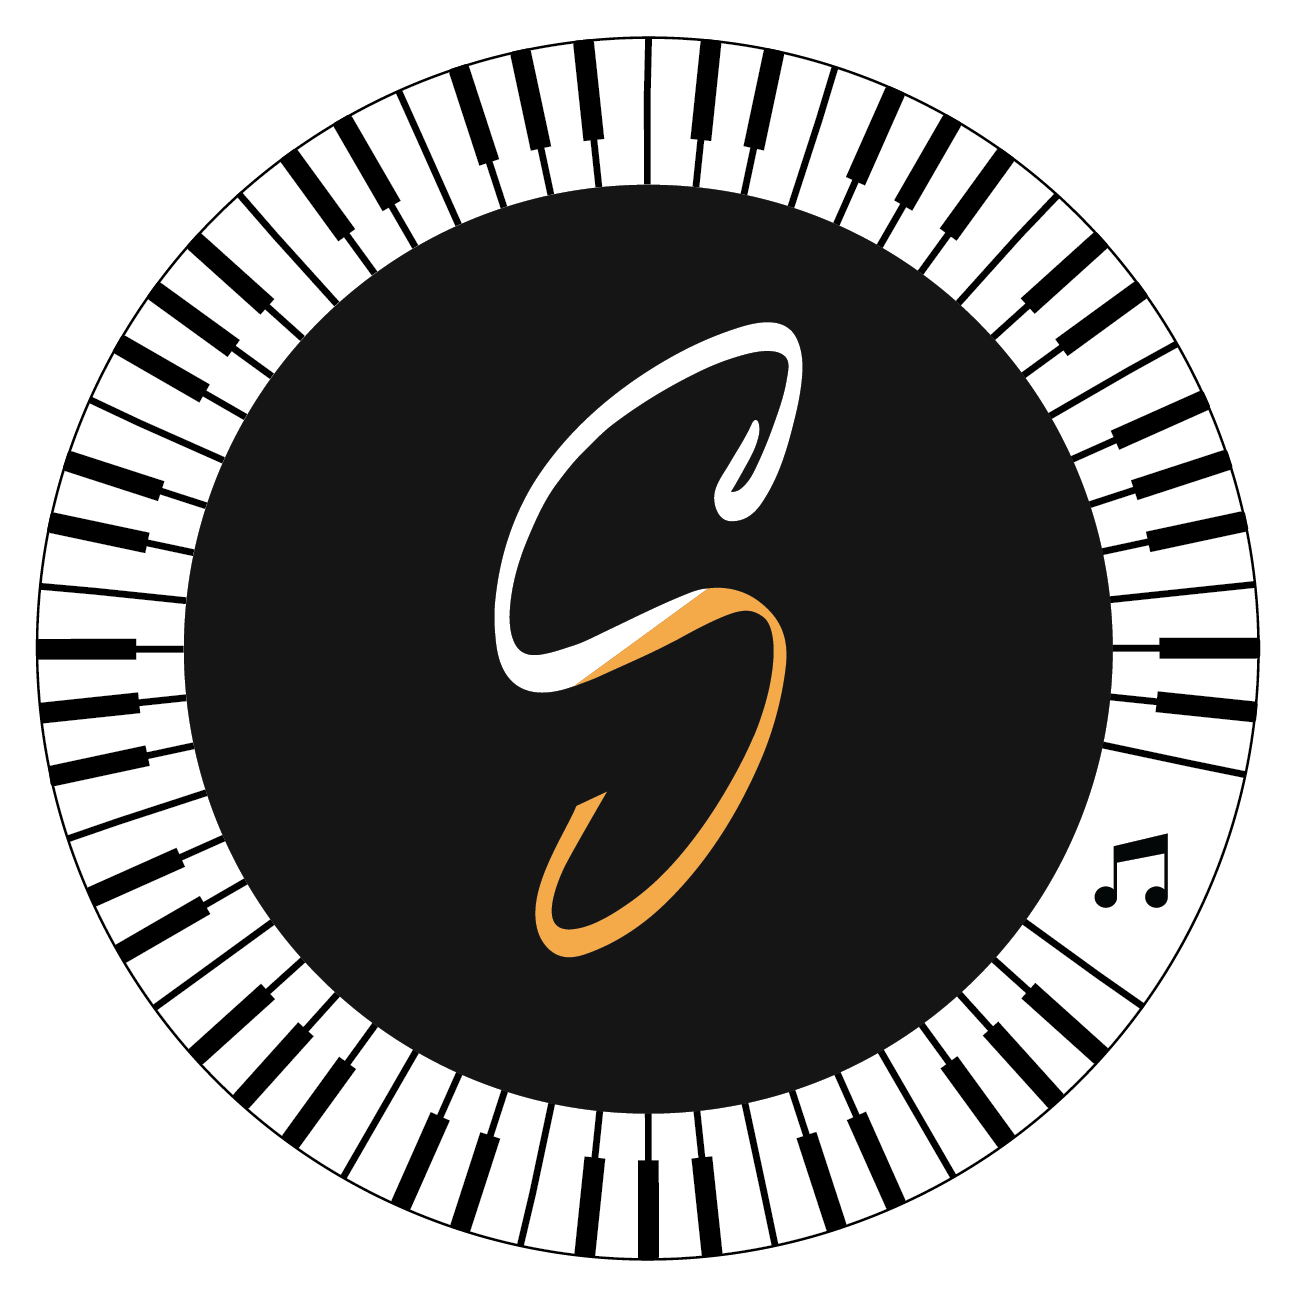 S Logo Surrounded by Piano Keys